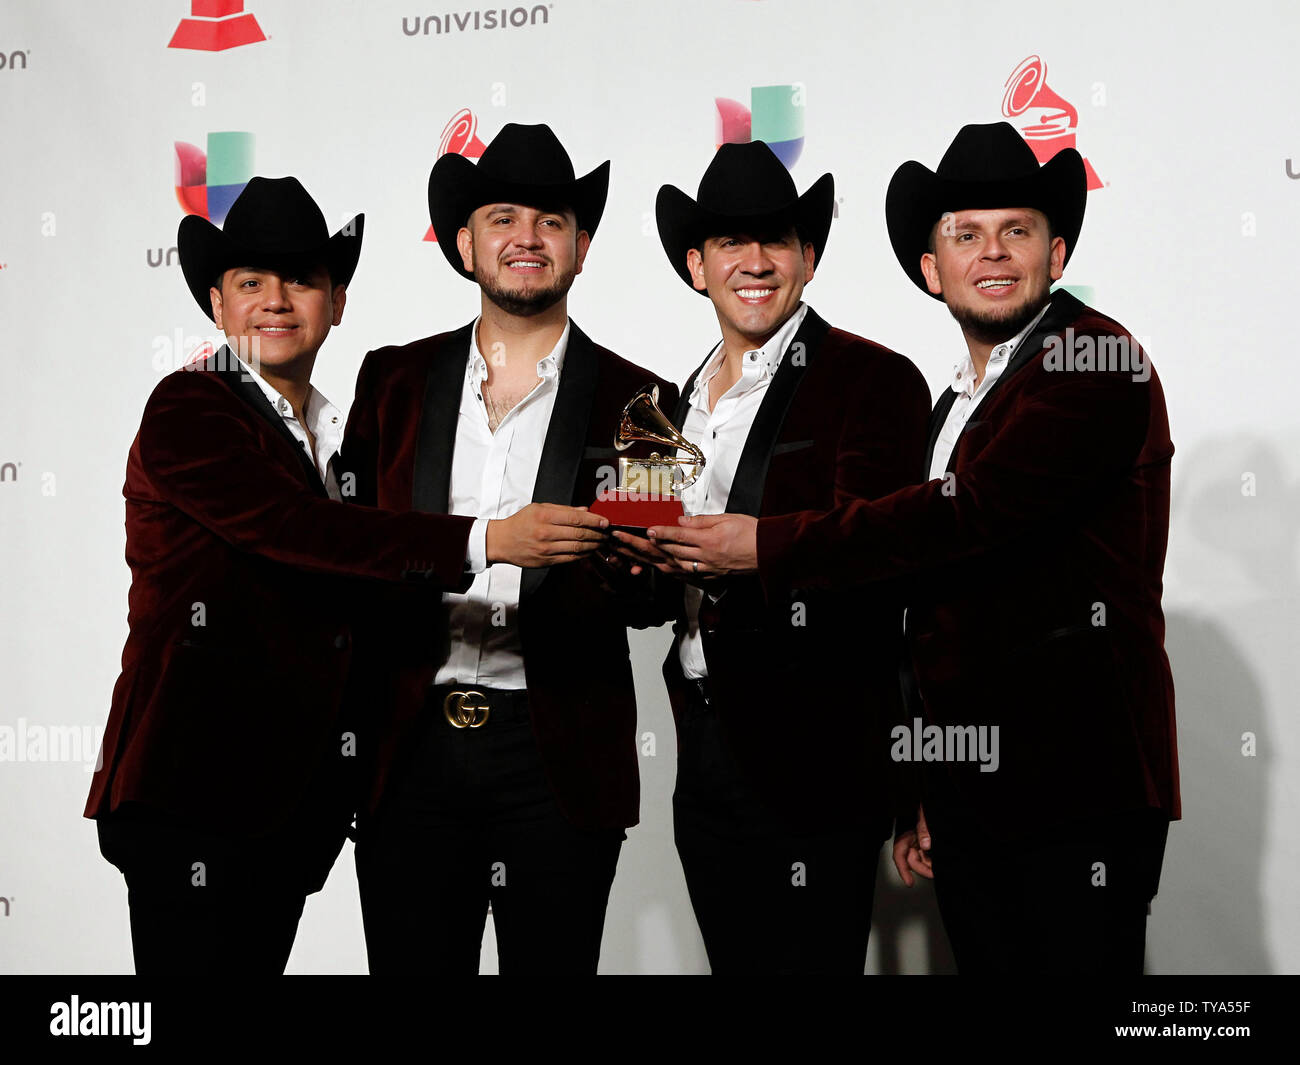 Calibre 50 apparaît avec le backstage award du meilleur album norteno pour 'Guerra de Poder' au cours de la 19e édition Latin Grammy Awards au MGM Garden Arena de Las Vegas, Nevada le 15 novembre 2018. Photo de James Atoa/UPI Banque D'Images